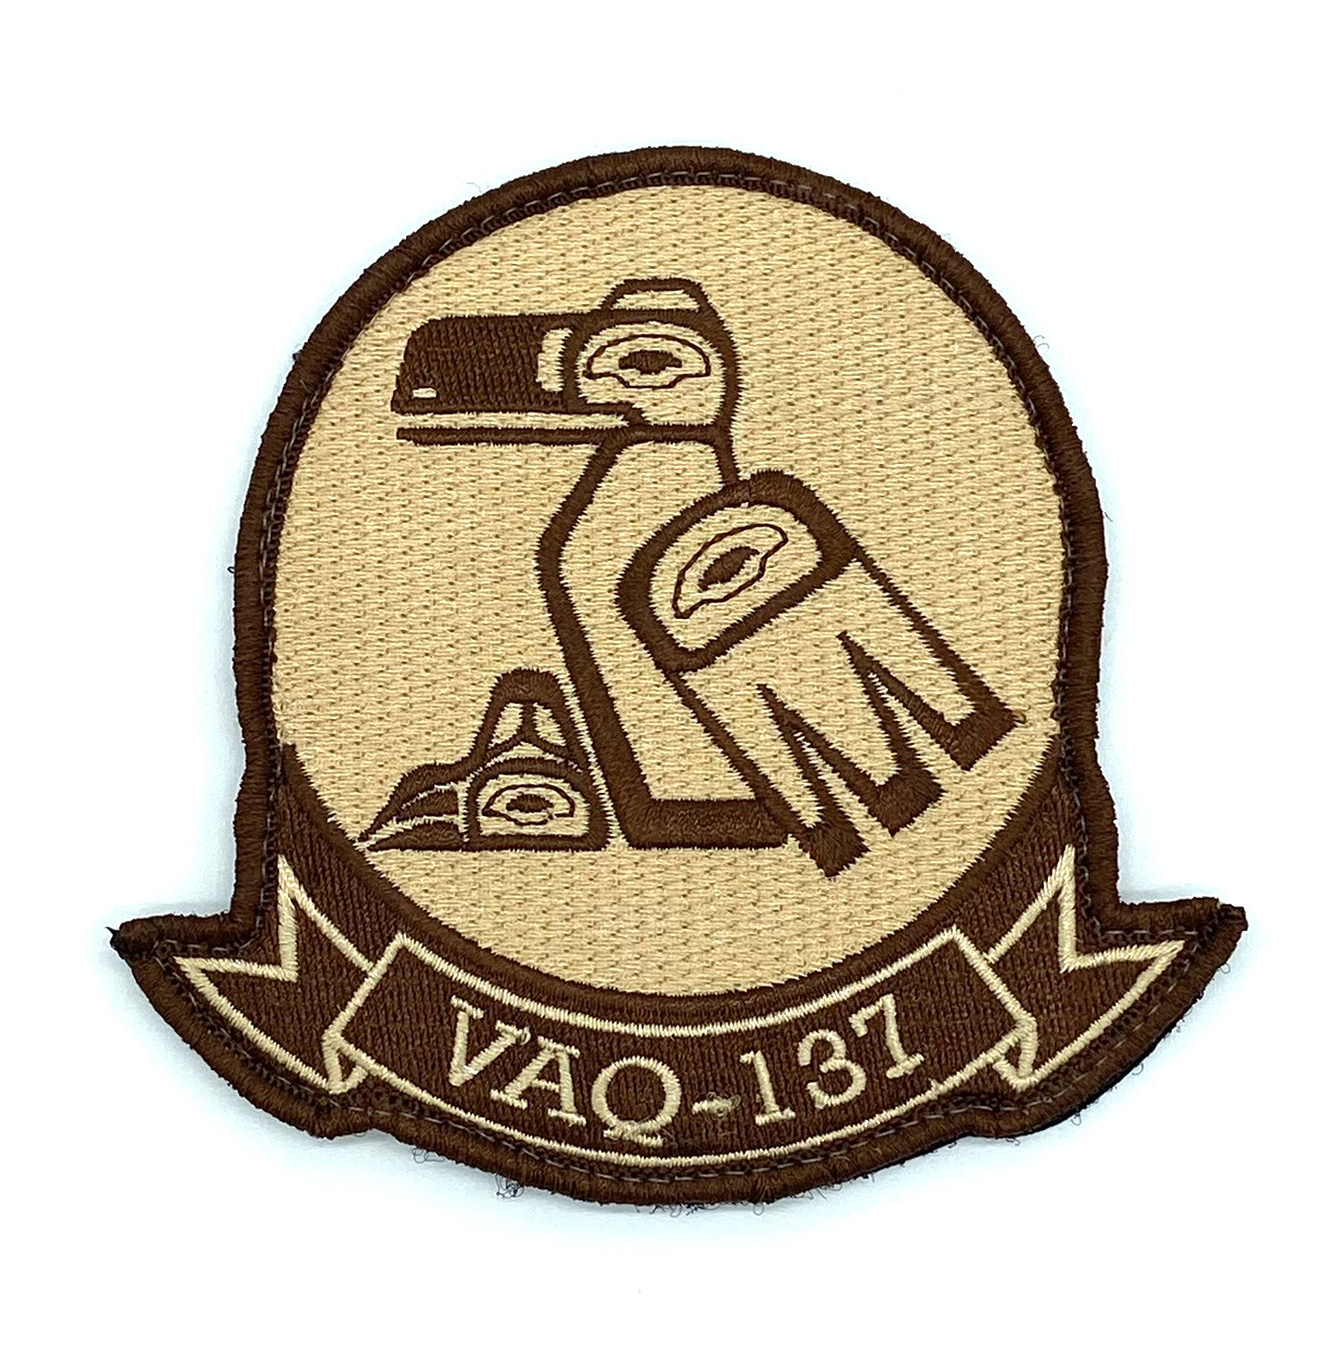 VAQ-137 Rooks Tan Squadron Patch